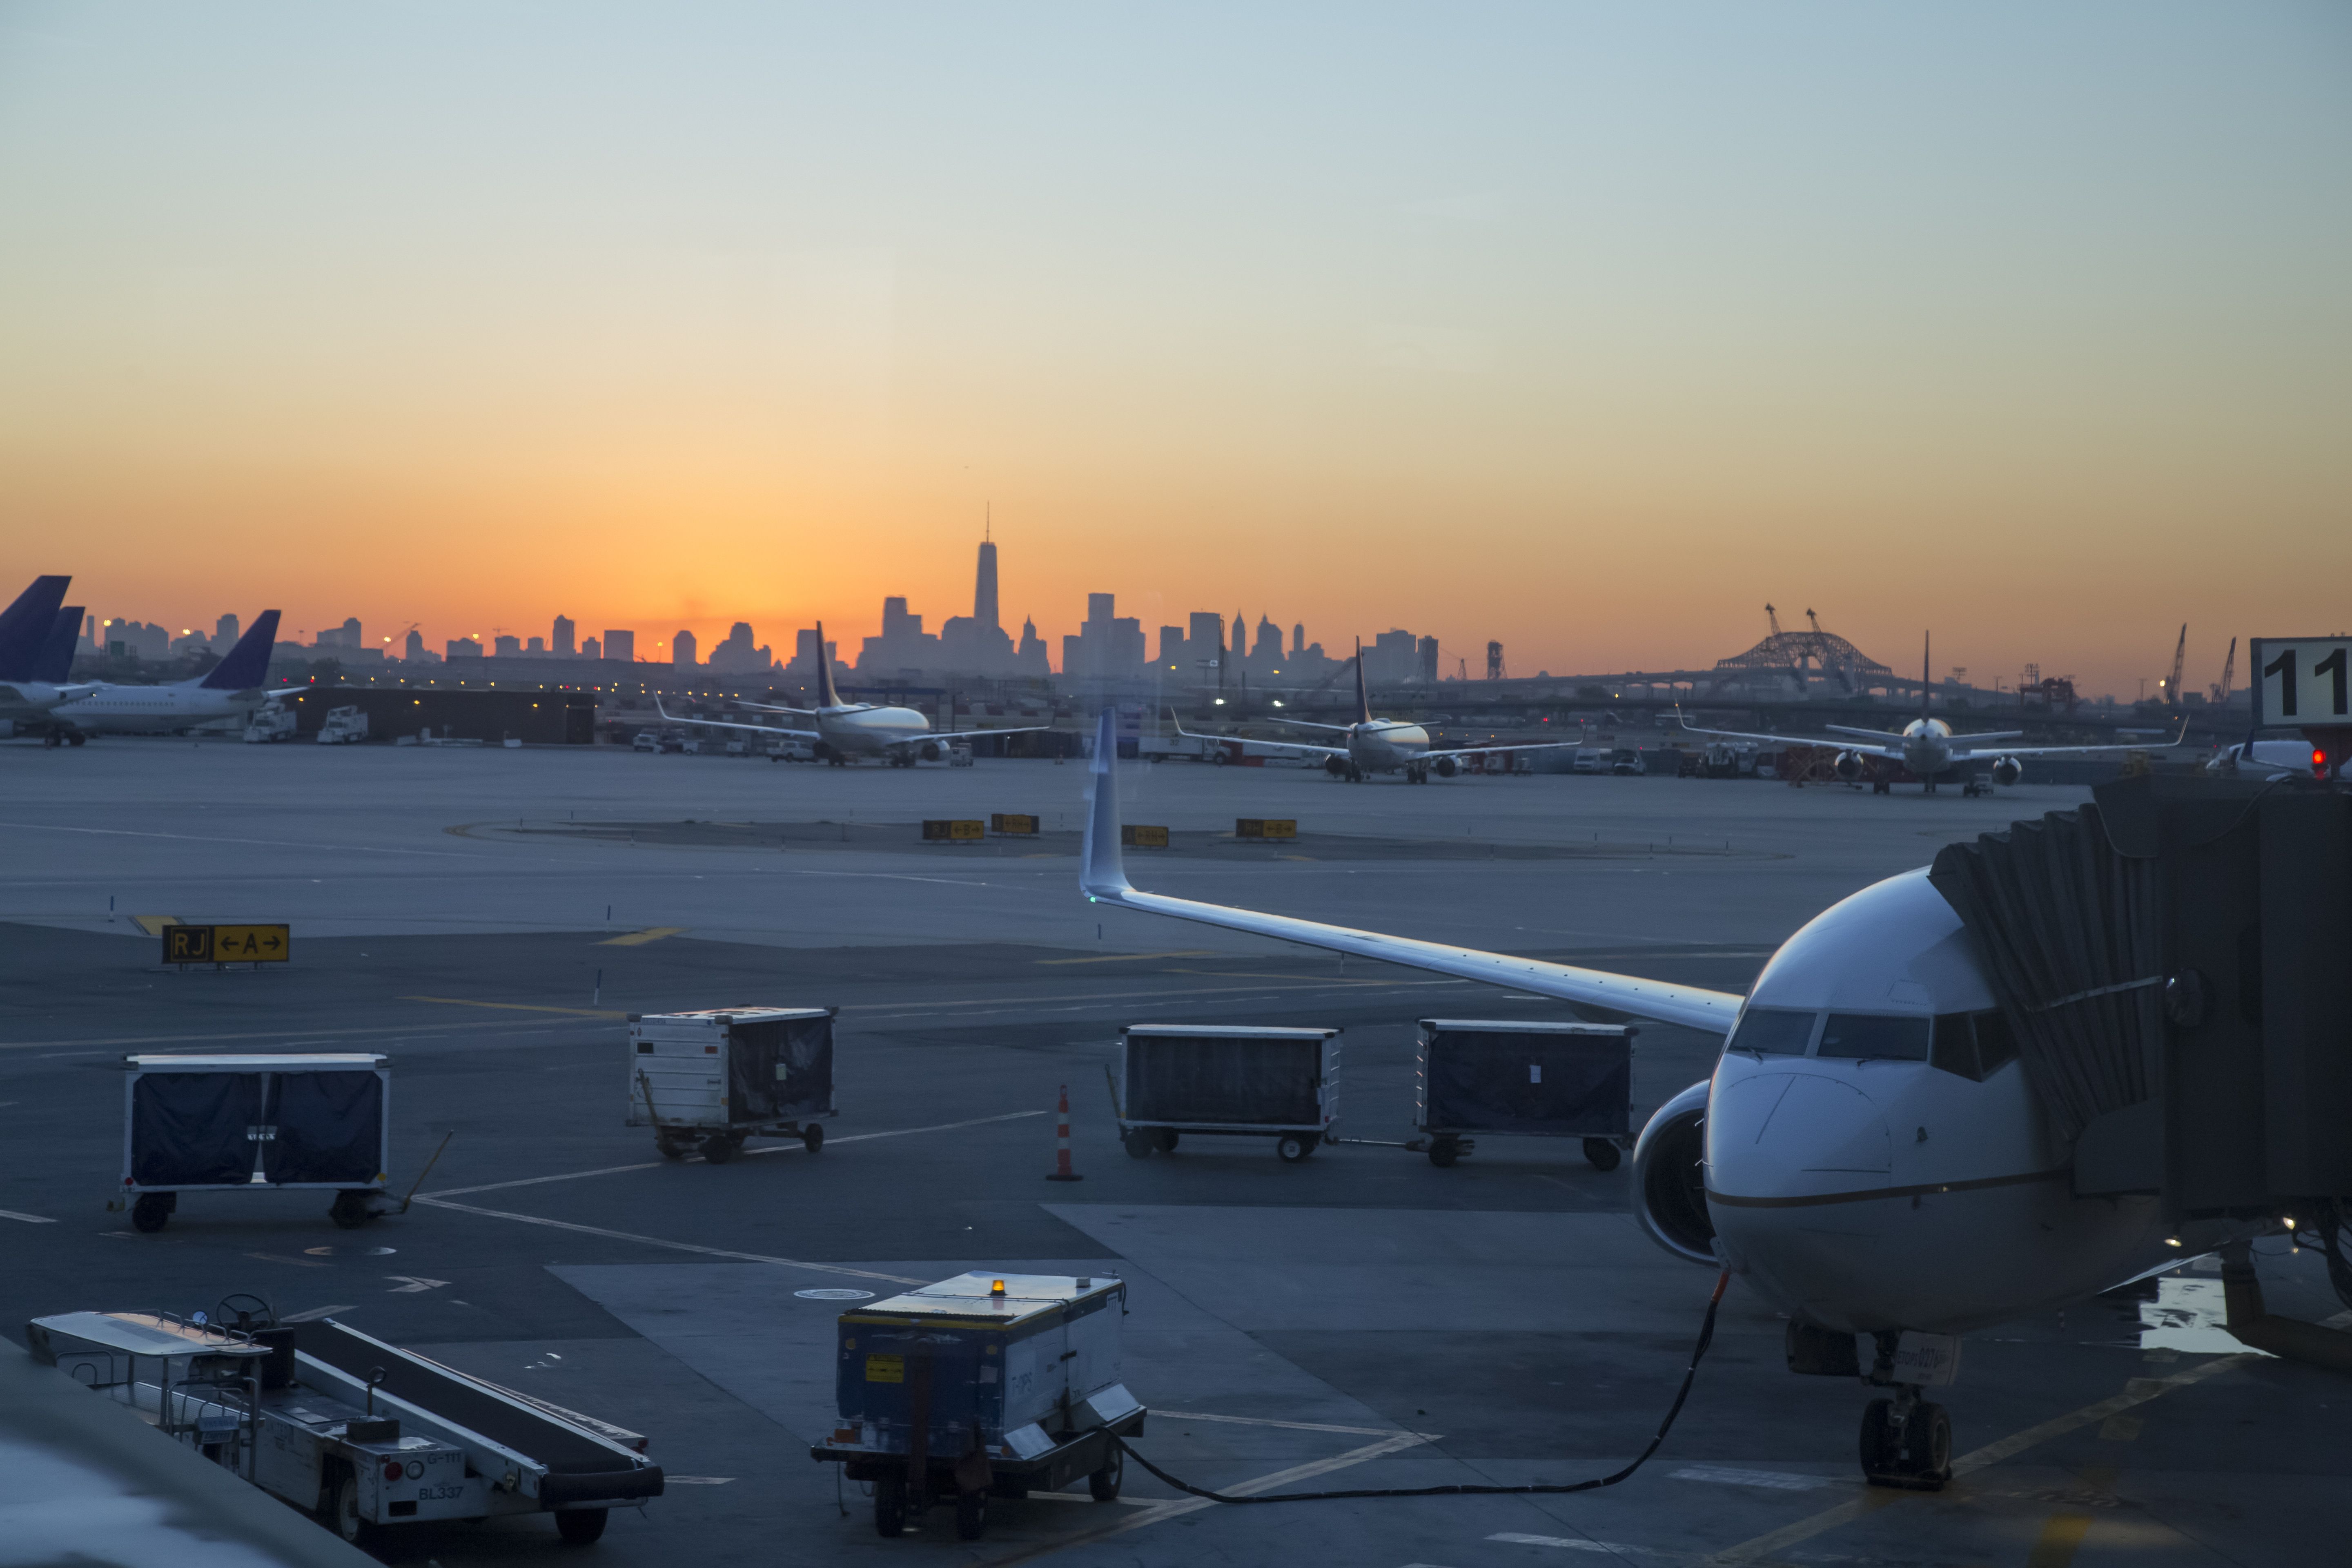 The sun rising over Newark Liberty International Airport.